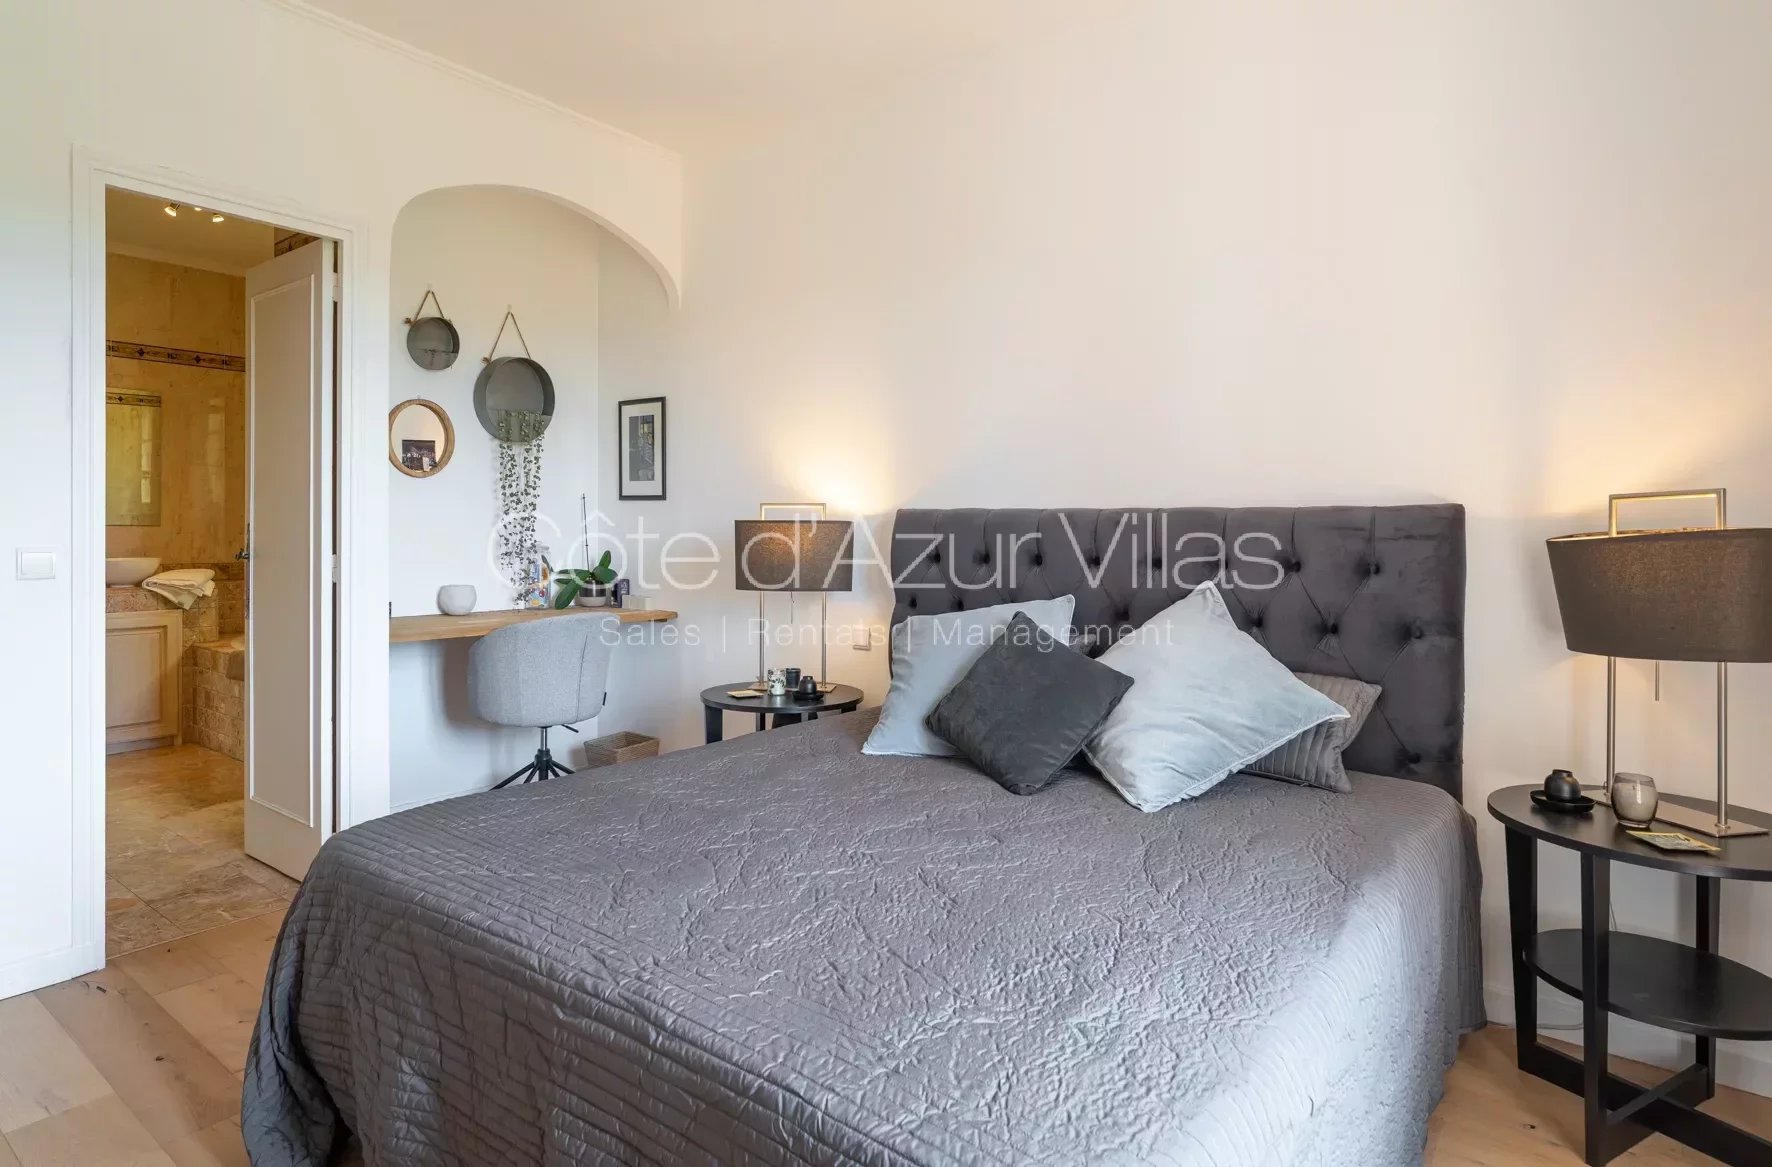 Mougins - 6 bedroom villa in a quiet area, in a dominant position